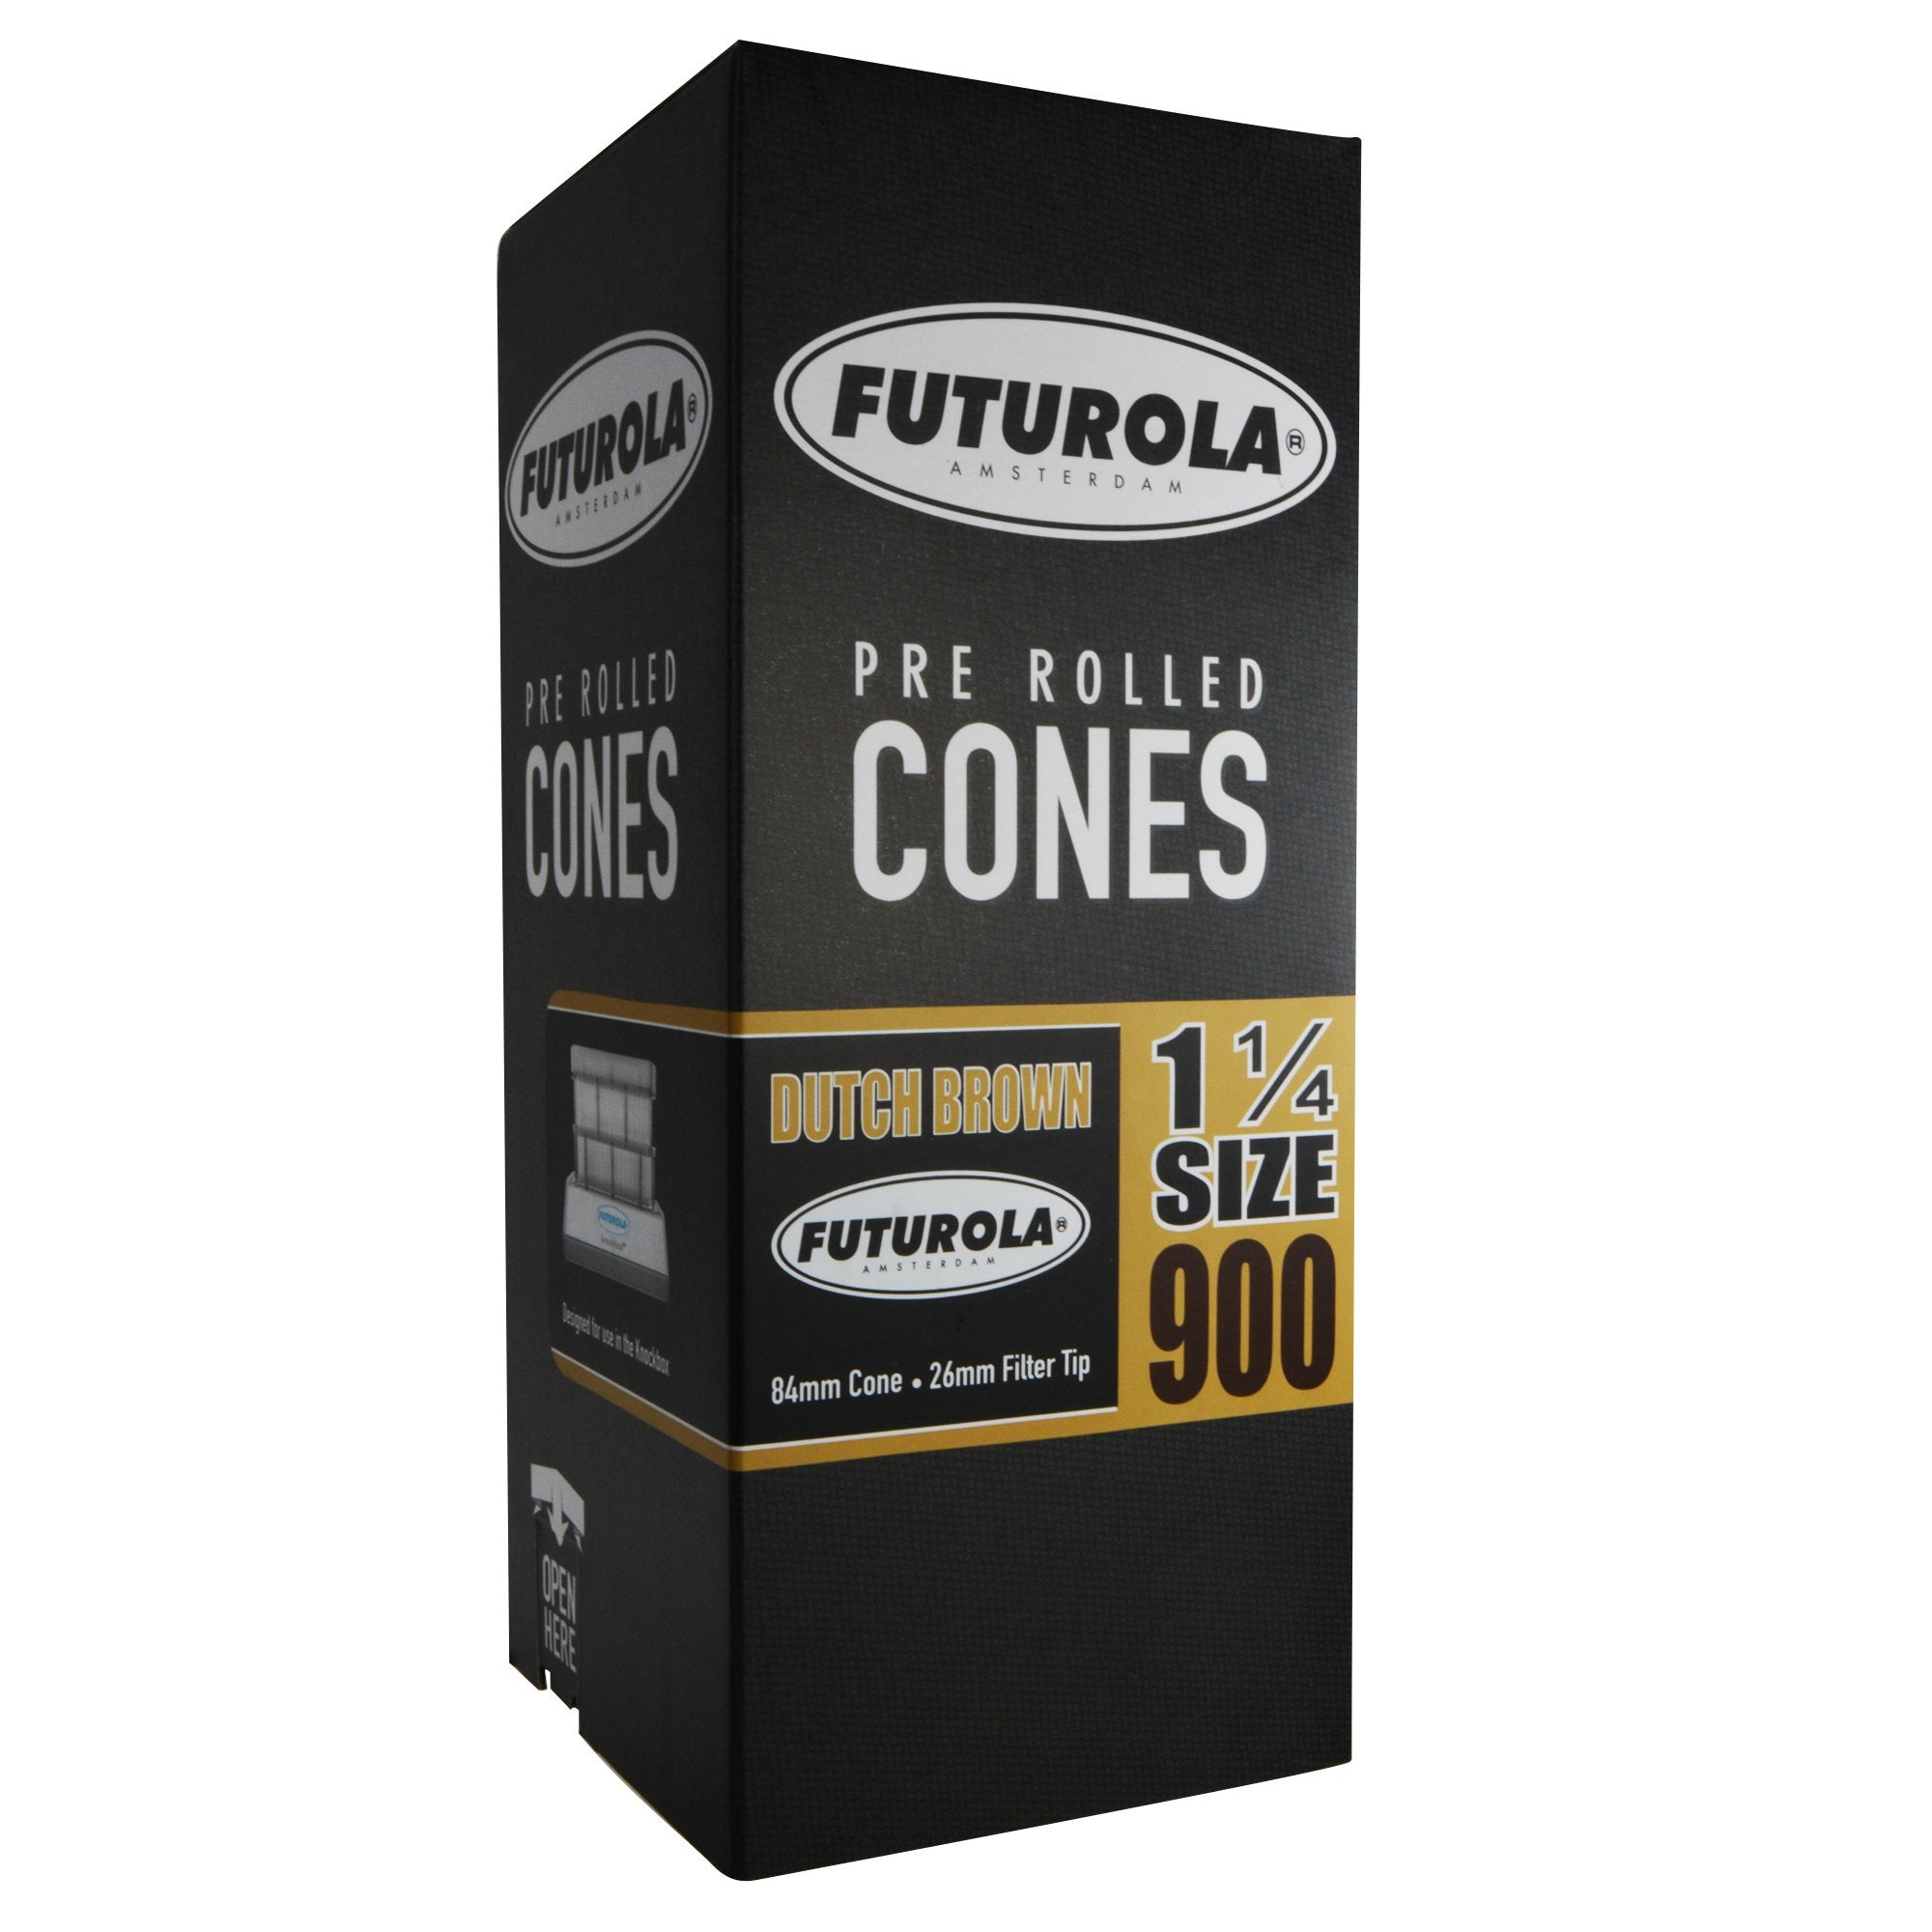 FUTUROLA | 1 1/4 Size Pre-Rolled Cones | 84mm - Dutch Brown Paper - 900 Count - 1